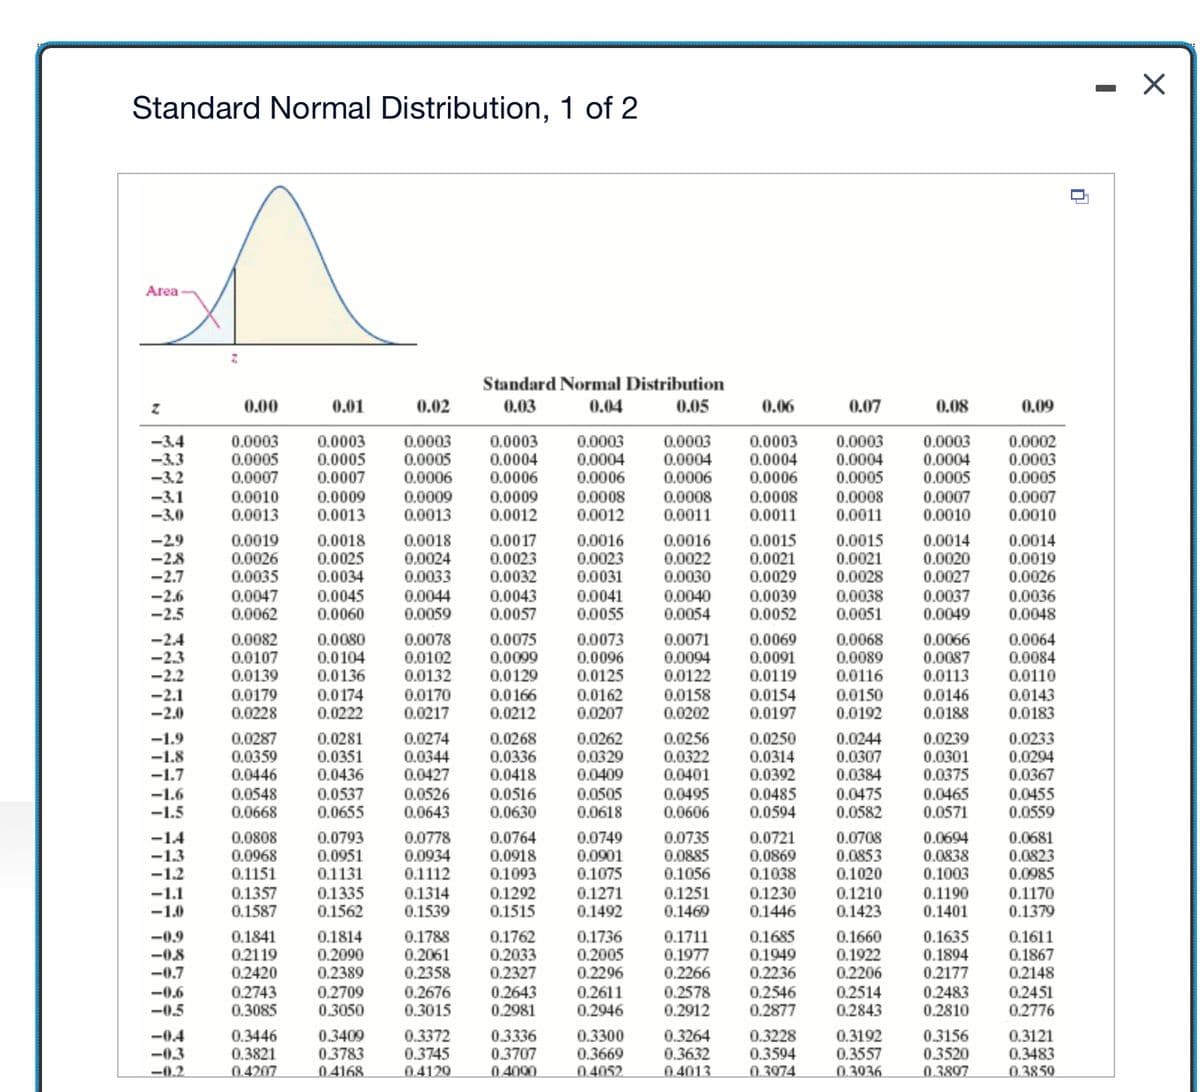 Standard Normal Distribution, 1 of 2
Area
Z
-3.4
-3.3
-3.2
-3.1
-3.0
-29
-2.8
-2.7
-2.6
-2.5
-2.4
-2.3
-2.2
-2.1
-2.0
-1.9
-1.8
-1.7
-1.6
-1.5
-1.4
-1.3
-1.2
-1.1
-1.0
-0.9
-0.8
-0.7
-0.6
-0.5
-0.4
-0.3
-0.2
0.00
0.0003
0.0005
0.0007
0.0010
0.0013
0.0019
0.0026
0.0035
0.0047
0.0062
0.0082
0.0107
0.0139
0.0179
0.0228
0.0287
0.0359
0.0446
0.0548
0.0668
0.0808
0.0968
0.1151
0.1357
0.1587
0.1841
0.2119
0.2420
0.2743
0.3085
0.3446
0.3821
0.4207
0.01
0.0003
0.0005
0.0007
0.0009
0.0013
0.0018
0.0025
0.0034
0.0045
0.0060
0.0080
0.0104
0.0136
0.0174
0.0222
0.0281
0.0351
0.0436
0.0537
0.0655
0.0793
0.0951
0.1131
0.1335
0.1562
0.1814
0.2090
0.2389
0.2709
0.3050
0.3409
0.3783
0.4168
0.02
0.0003
0.0005
0.0006
0.0009
0.0013
0.0018
0.0024
0.0033
0.0044
0.0059
0.0078
0.0102
0.0132
0.0170
0.0217
0.0274
0.0344
0.0427
0.0526
0.0643
0.0778
0.0934
0.1112
0.1314
0.1539
0.1788
0.2061
0.2358
0.2676
0.3015
0.3372
0.3745
0.4129
Standard Normal Distribution
0.03
0.04
0.05
0.0003
0.0004
0.0006
0.0009
0.0012
0.0017
0.0023
0.0032
0.0043
0.0057
0.0075
0.0099
0.0129
0.0166
0.0212
0.0268
0.0336
0.0418
0.0516
0.0630
0.0764
0.0918
0.1093
0.1292
0.1515
0.1762
0.2033
0.2327
0.2643
0.2981
0.3336
0.3707
0.4090
0.0003
0.0004
0.0006
0.0008
0.0012
0.0016
0.0023
0.0031
0.0041
0.0055
0.0073
0.0096
0.0125
0.0162
0.0207
0.0262
0.0329
0.0409
0.0505
0.0618
0.0749
0.0901
0.1075
0.1271
0.1492
0.1736
0.2005
0.2296
0.2611
0.2946
0.3300
0.3669
0.4052
0.0003
0.0004
0.0006
0.0008
0.0011
0.0016
0.0022
0.0030
0.0040
0.0054
0.0071
0.0094
0.0122
0.0158
0.0202
0.0256
0.0322
0.0401
0.0495
0.0606
0.0735
0.0885
0.1056
0.1251
0.1469
0.1711
0.1977
0.2266
0.2578
0.2912
0.3264
0.3632
0.4013
0.06
0.0003
0.0003
0.0004 0.0004
0.0006
0.0005
0.0008
0.0008
0.0011
0.0011
0.0015
0.0021
0.0029
0.0039
0.0052
0.0069
0.0091
0.0119
0.0154
0.0197
0.0250
0.0314
0.0392
0.0485
0.0594
0.0721
0.0869
0.1038
0.1230
0.1446
0.07
0.2546
0.2877
0.3228
0.3594
0.3974
0.0015
0.0021
0.0028
0.0038
0.0051
0.0068
0.0089
0.0116
0.0150
0.0192
0.0244
0.0307
0.0384
0.0475
0.0582
0.0708
0.0853
0.1020
0.1685 0.1660
0.1949
0.1922
0.2236
0.2206
0.1210
0.1423
0.2514
0.2843
0.3192
0.3557
0.3936
0.08
0.0003
0.0004
0.0005
0.0007
0.0010
0.0014
0.0020
0.0027
0.0037
0.0049
0.0066
0.0087
0.0113
0.0146
0.0188
0.0239
0.0301
0.0375
0.0465
0.0571
0.0694
0.0838
0.1003
0.1190
0.1401
0.1635
0.1894
0.2177
0.2483
0.2810
0.3156
0.3520
0.3897
0.09
0.0002
0.0003
0.0005
0.0007
0.0010
0.0014
0.0019
0.0026
0.0036
0.0048
0.0064
0.0084
0.0110
0.0143
0.0183
0.0233
0.0294
0.0367
0.0455
0.0559
0.0681
0.0823
0.0985
0.1170
0.1379
0.1611
0.1867
0.2148
0.2451
0.2776
0.3121
0.3483
0.3859